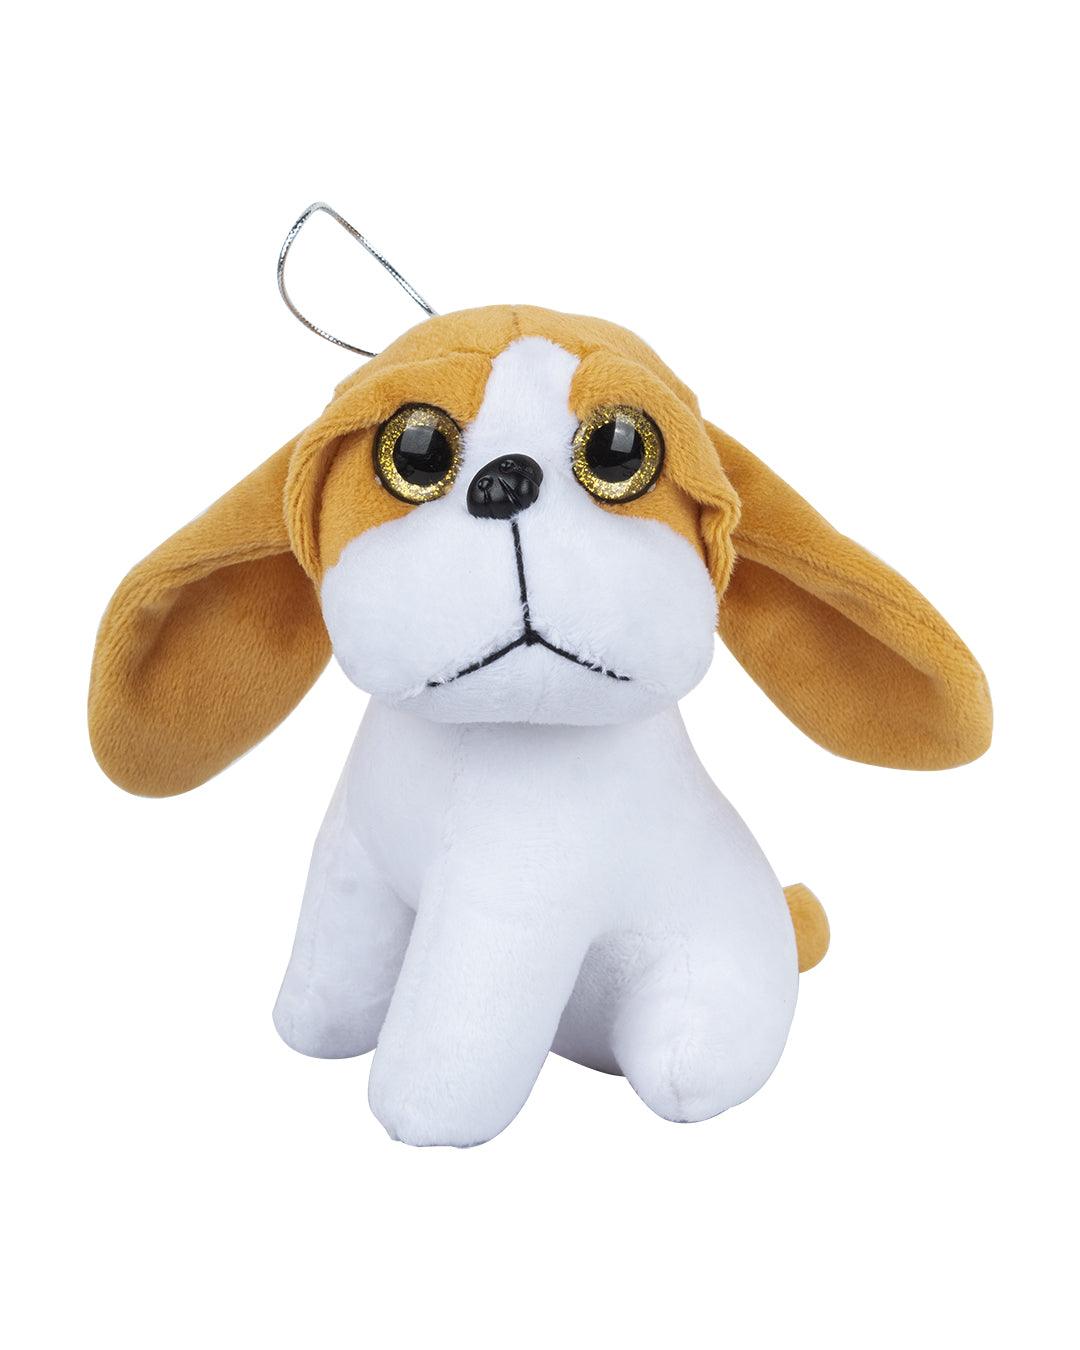 DIMPY STUFF Dog Standing Stuffed Animal Toy (15cm, Brown & White) - Plush Toy - MARKET 99